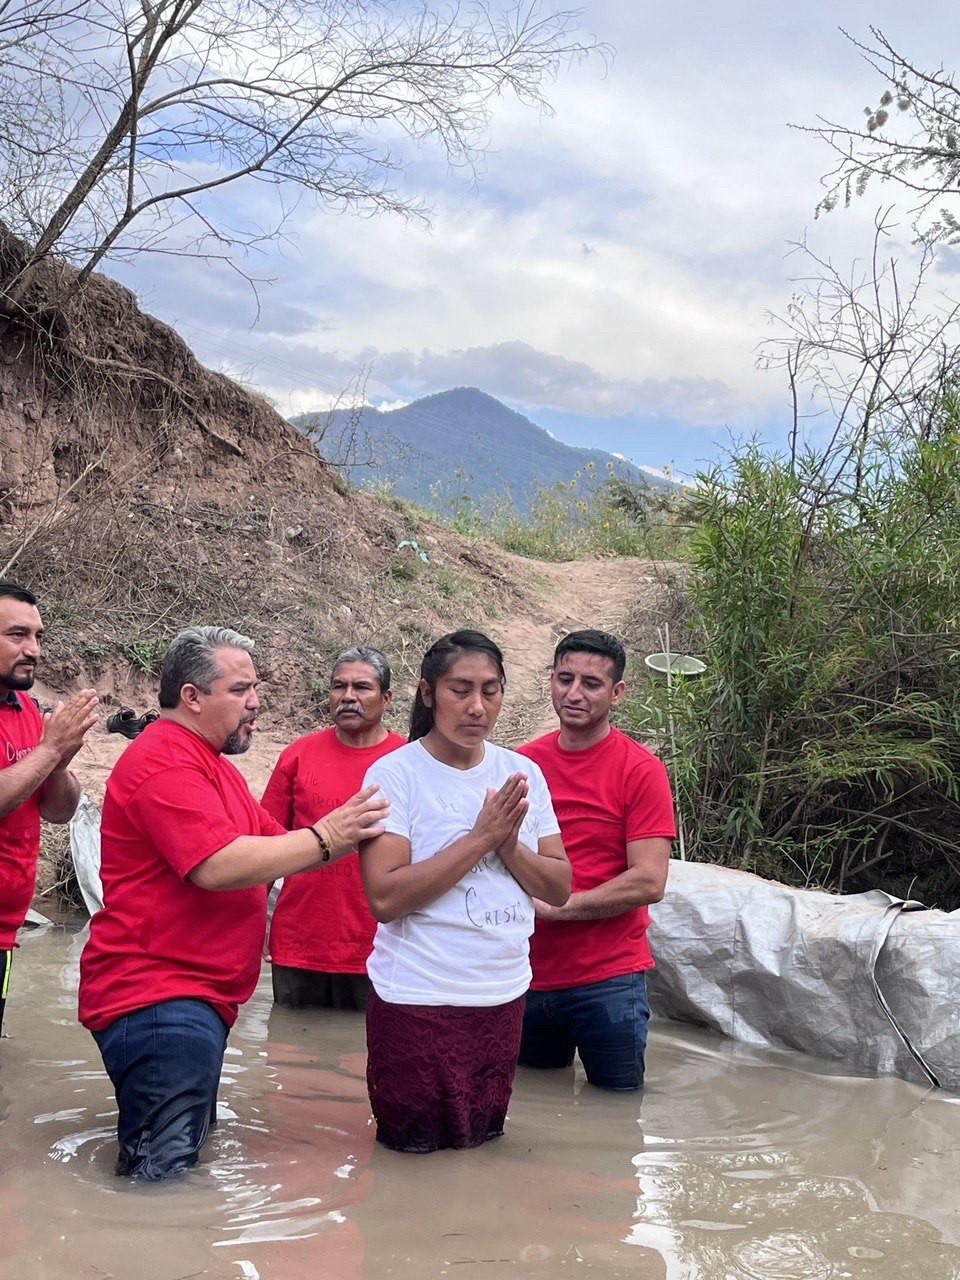 MEXICO | JUN. 10, 2022 — New Believers Celebrate Baptism Amid Community Pressure